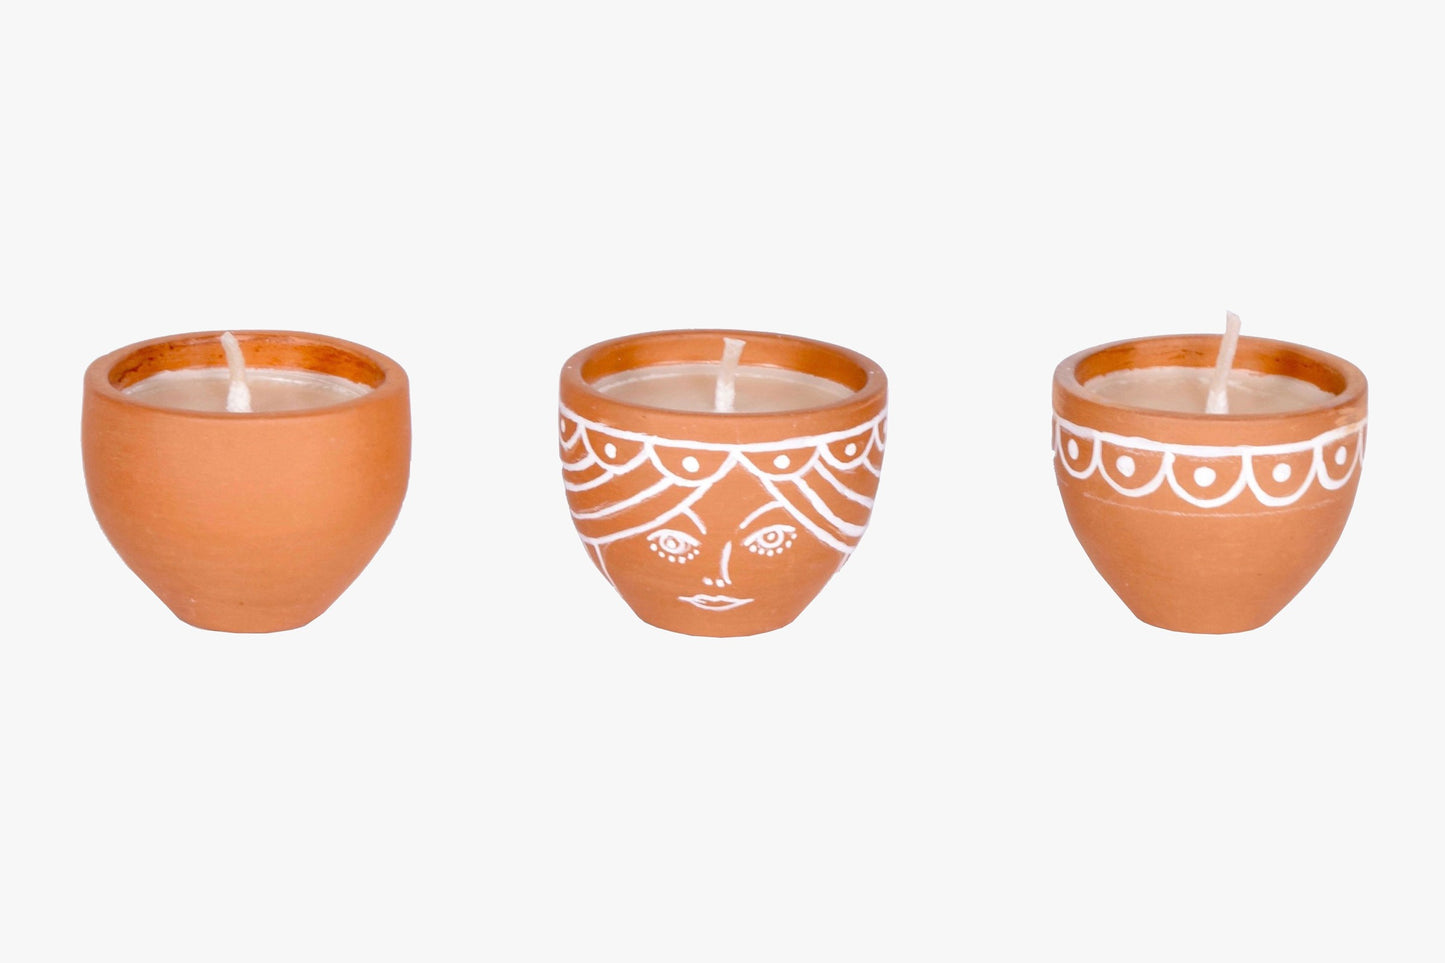 Velas de té de cerámica Poetware